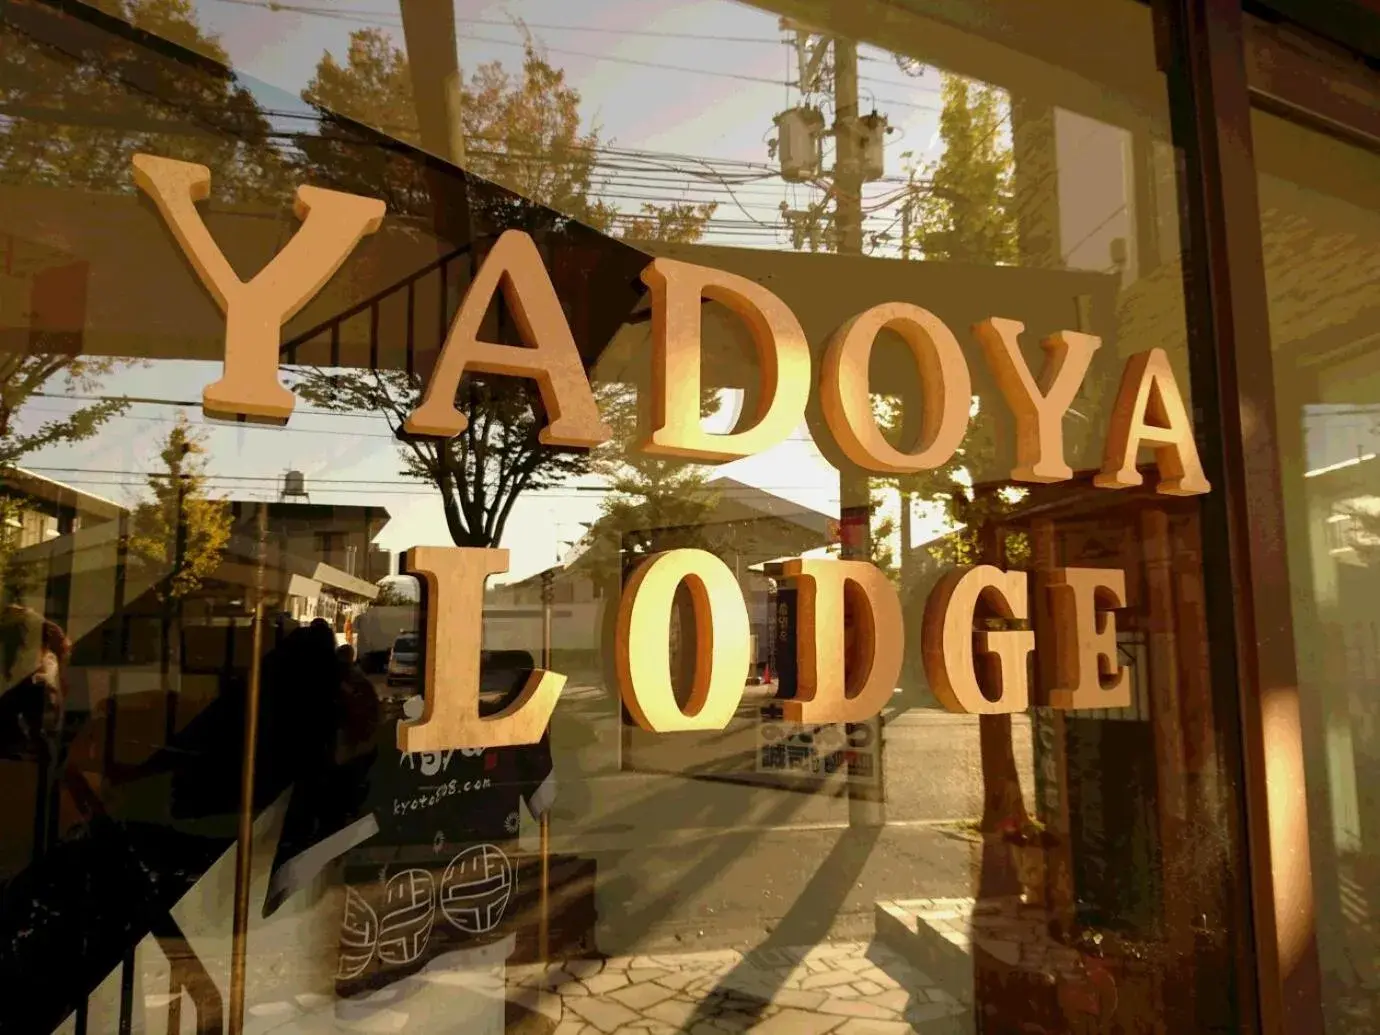 Property logo or sign in Yadoya Lodge